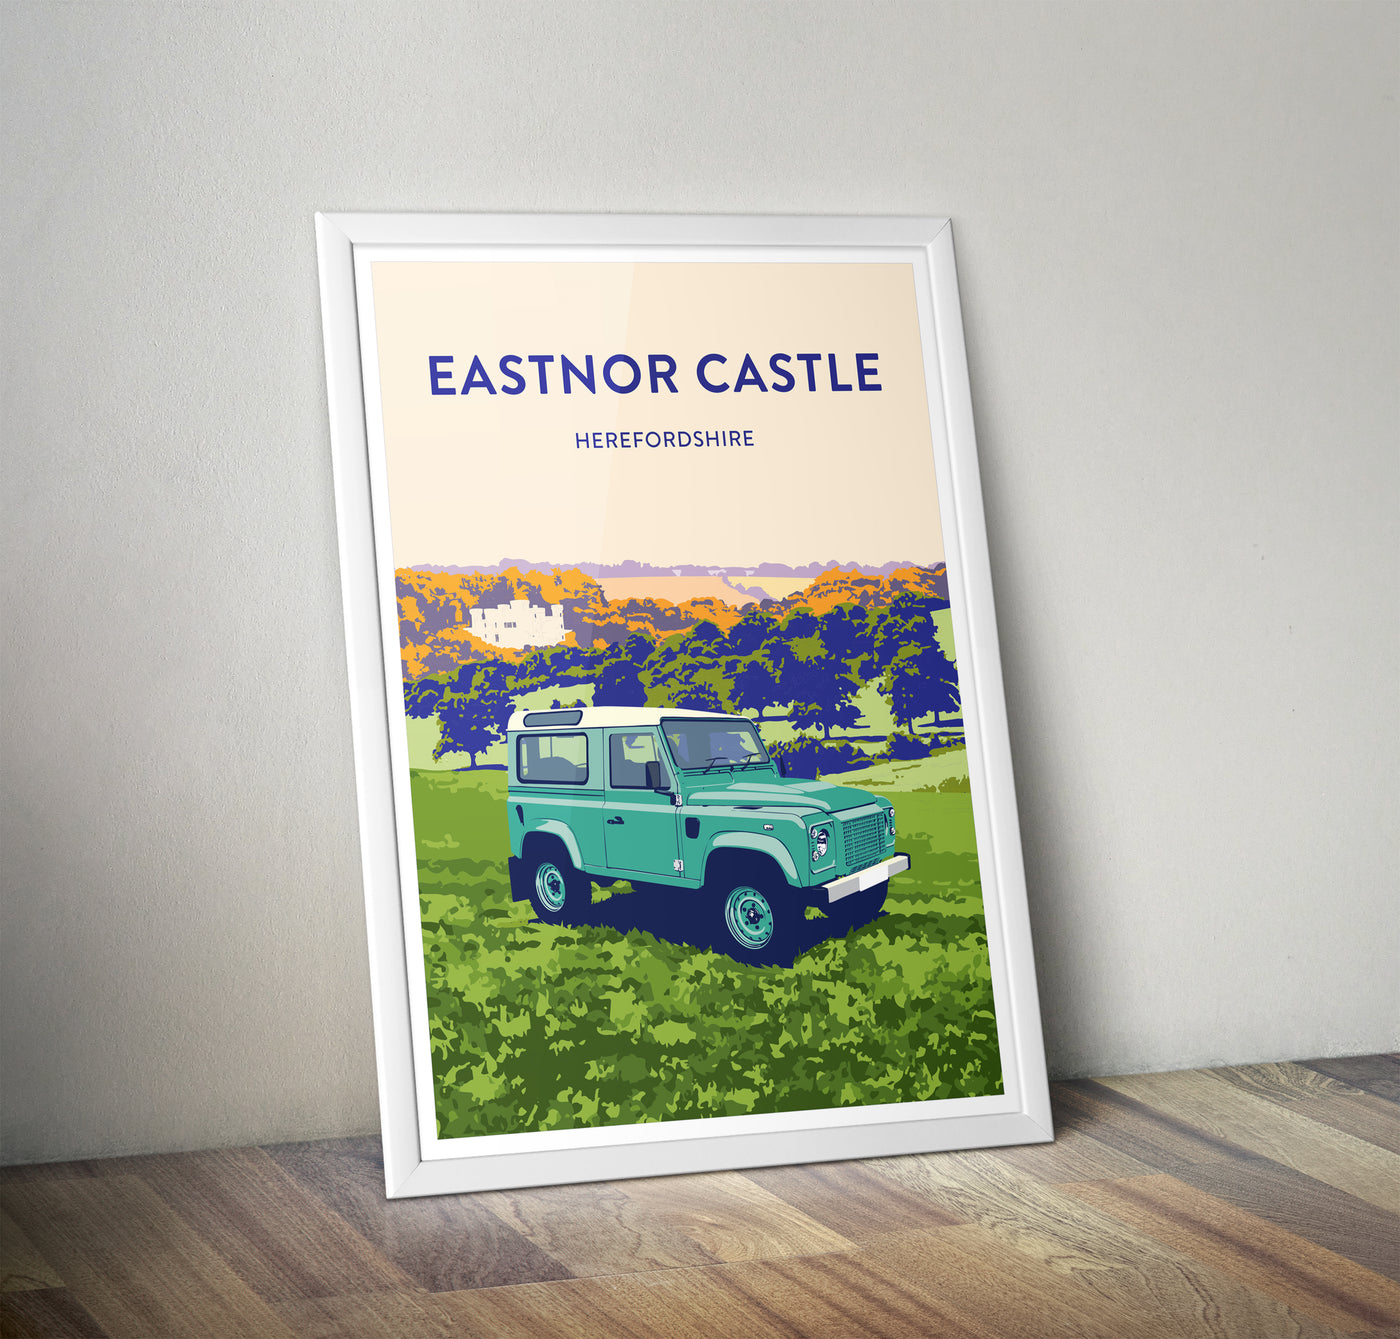 'Eastnor Castle' Heritage prints